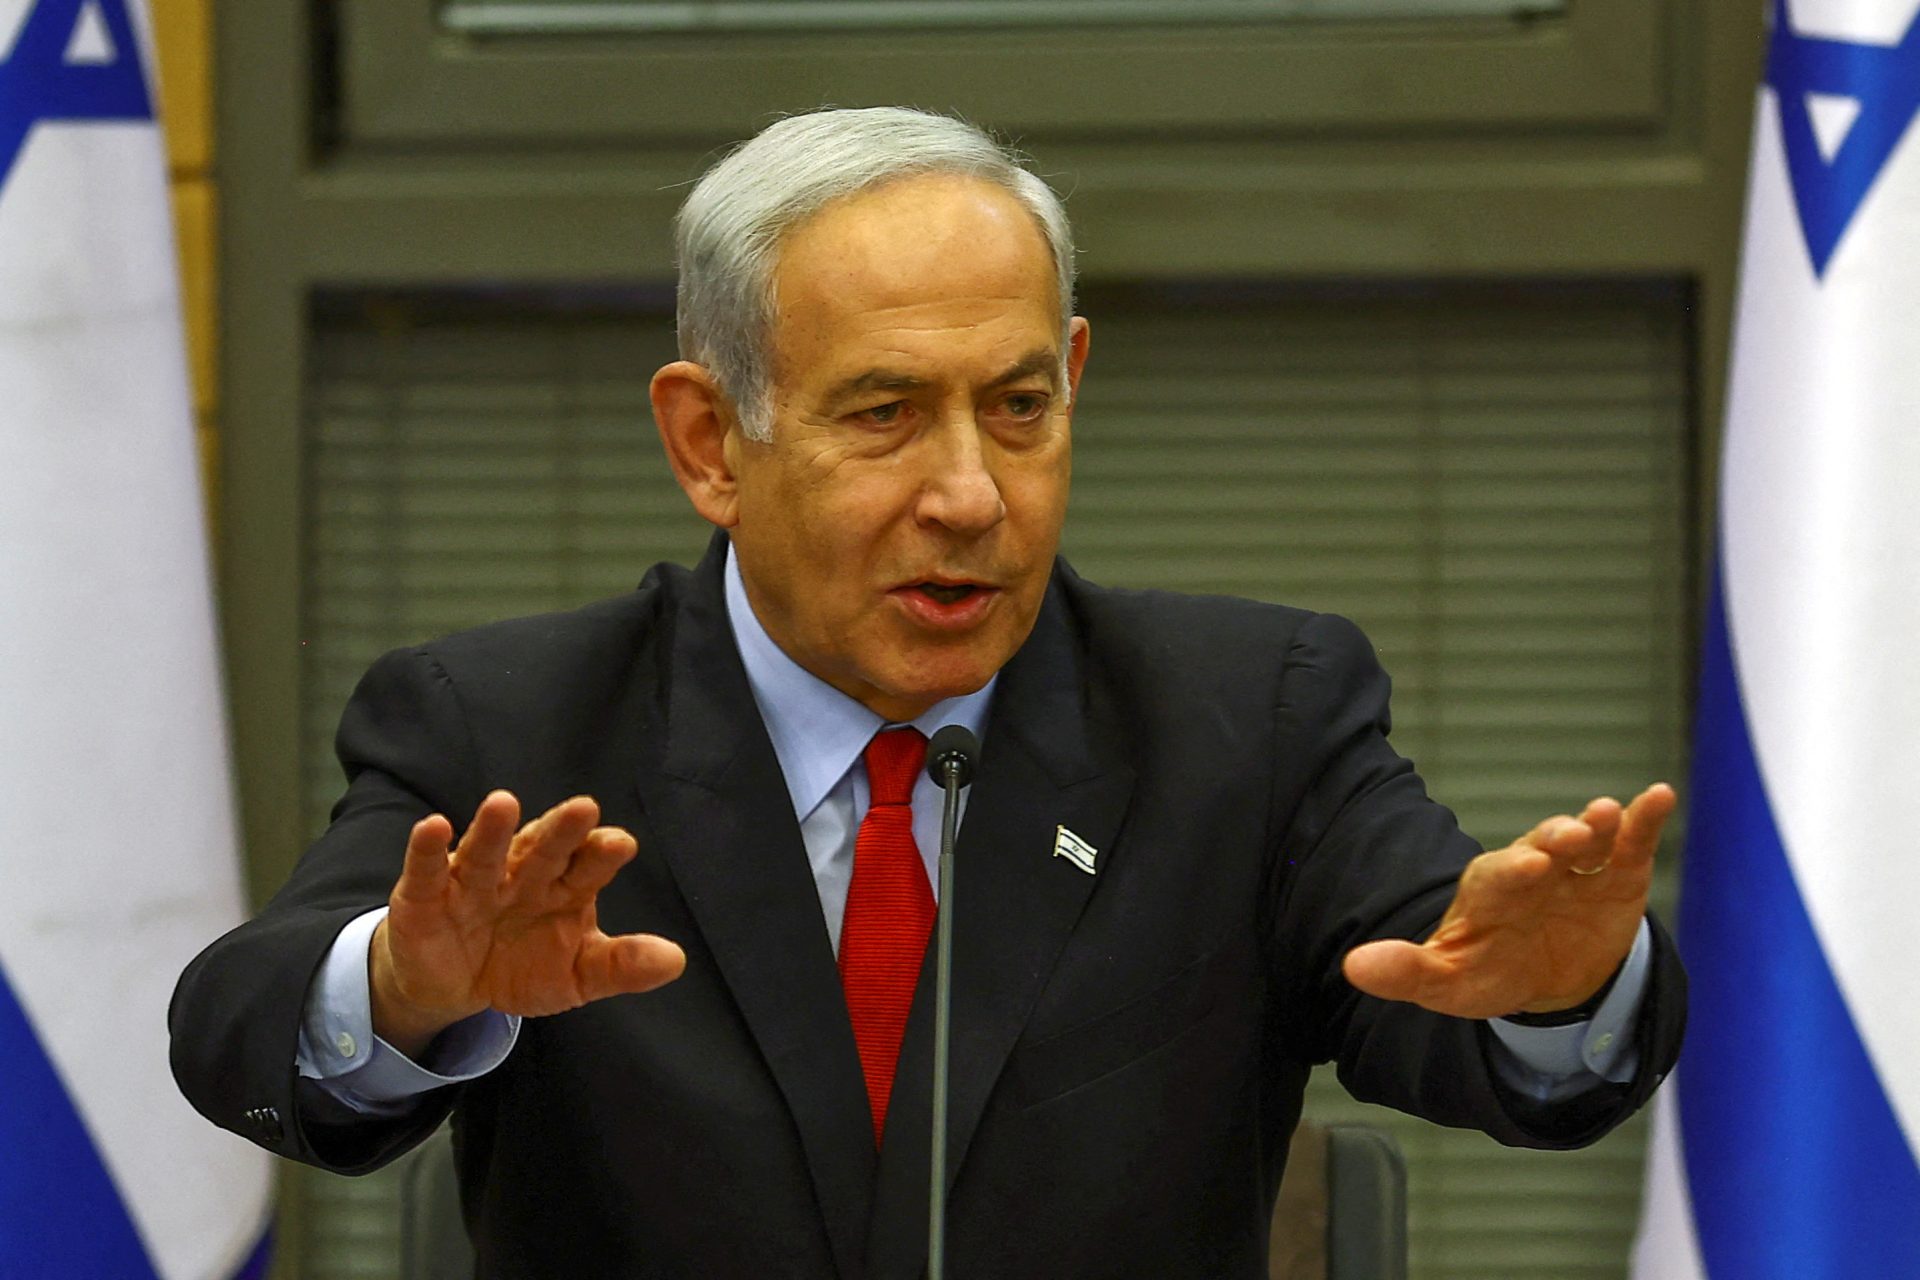 Congrès US prêt à boycotter massivement Netanyahu selon Axios